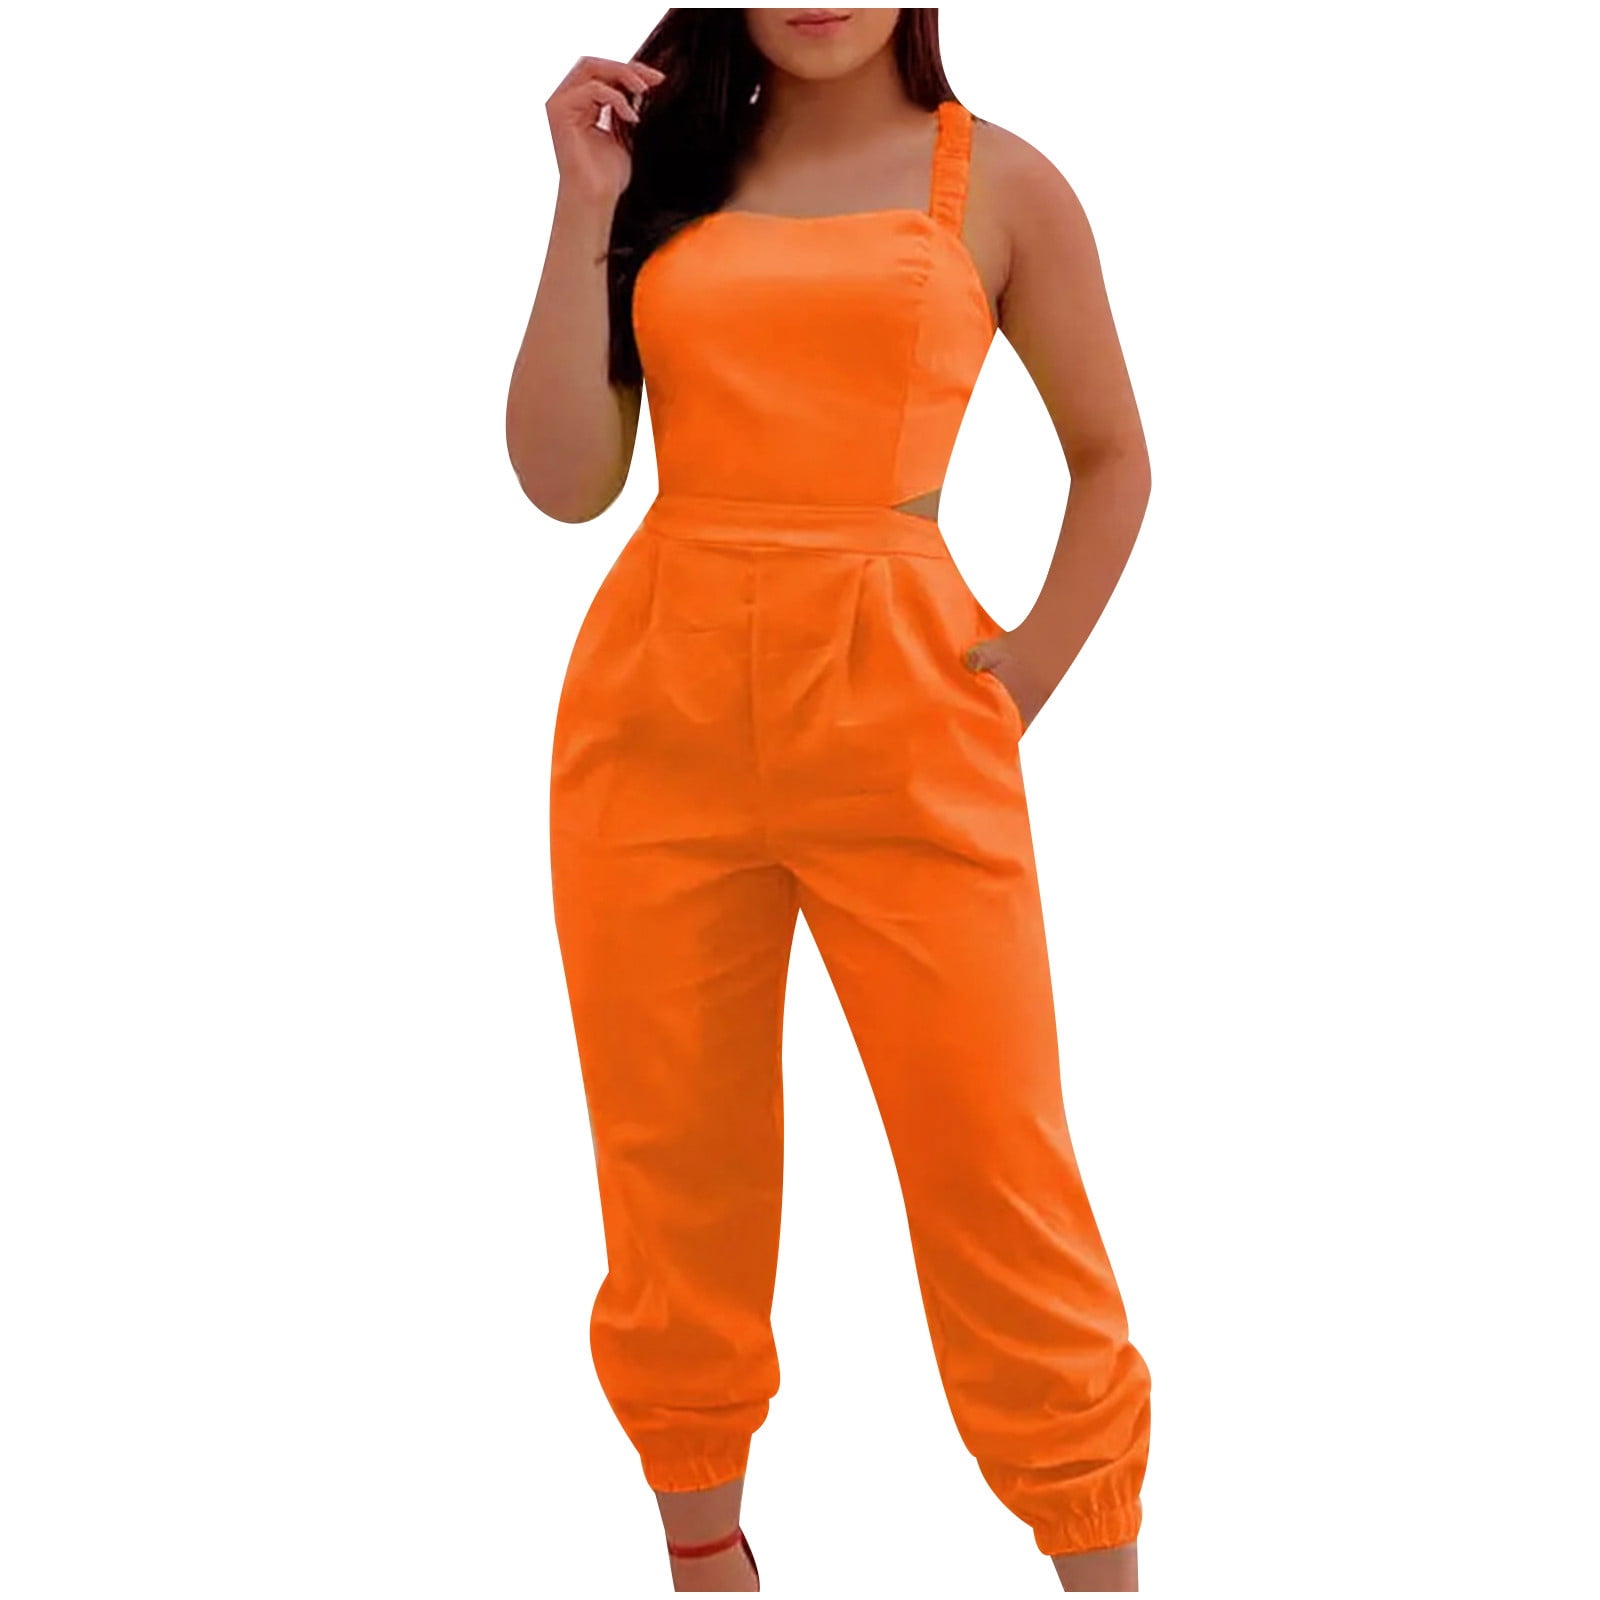 Buy Women Solid Regular Fit Orange Jumpsuit Online - 760015